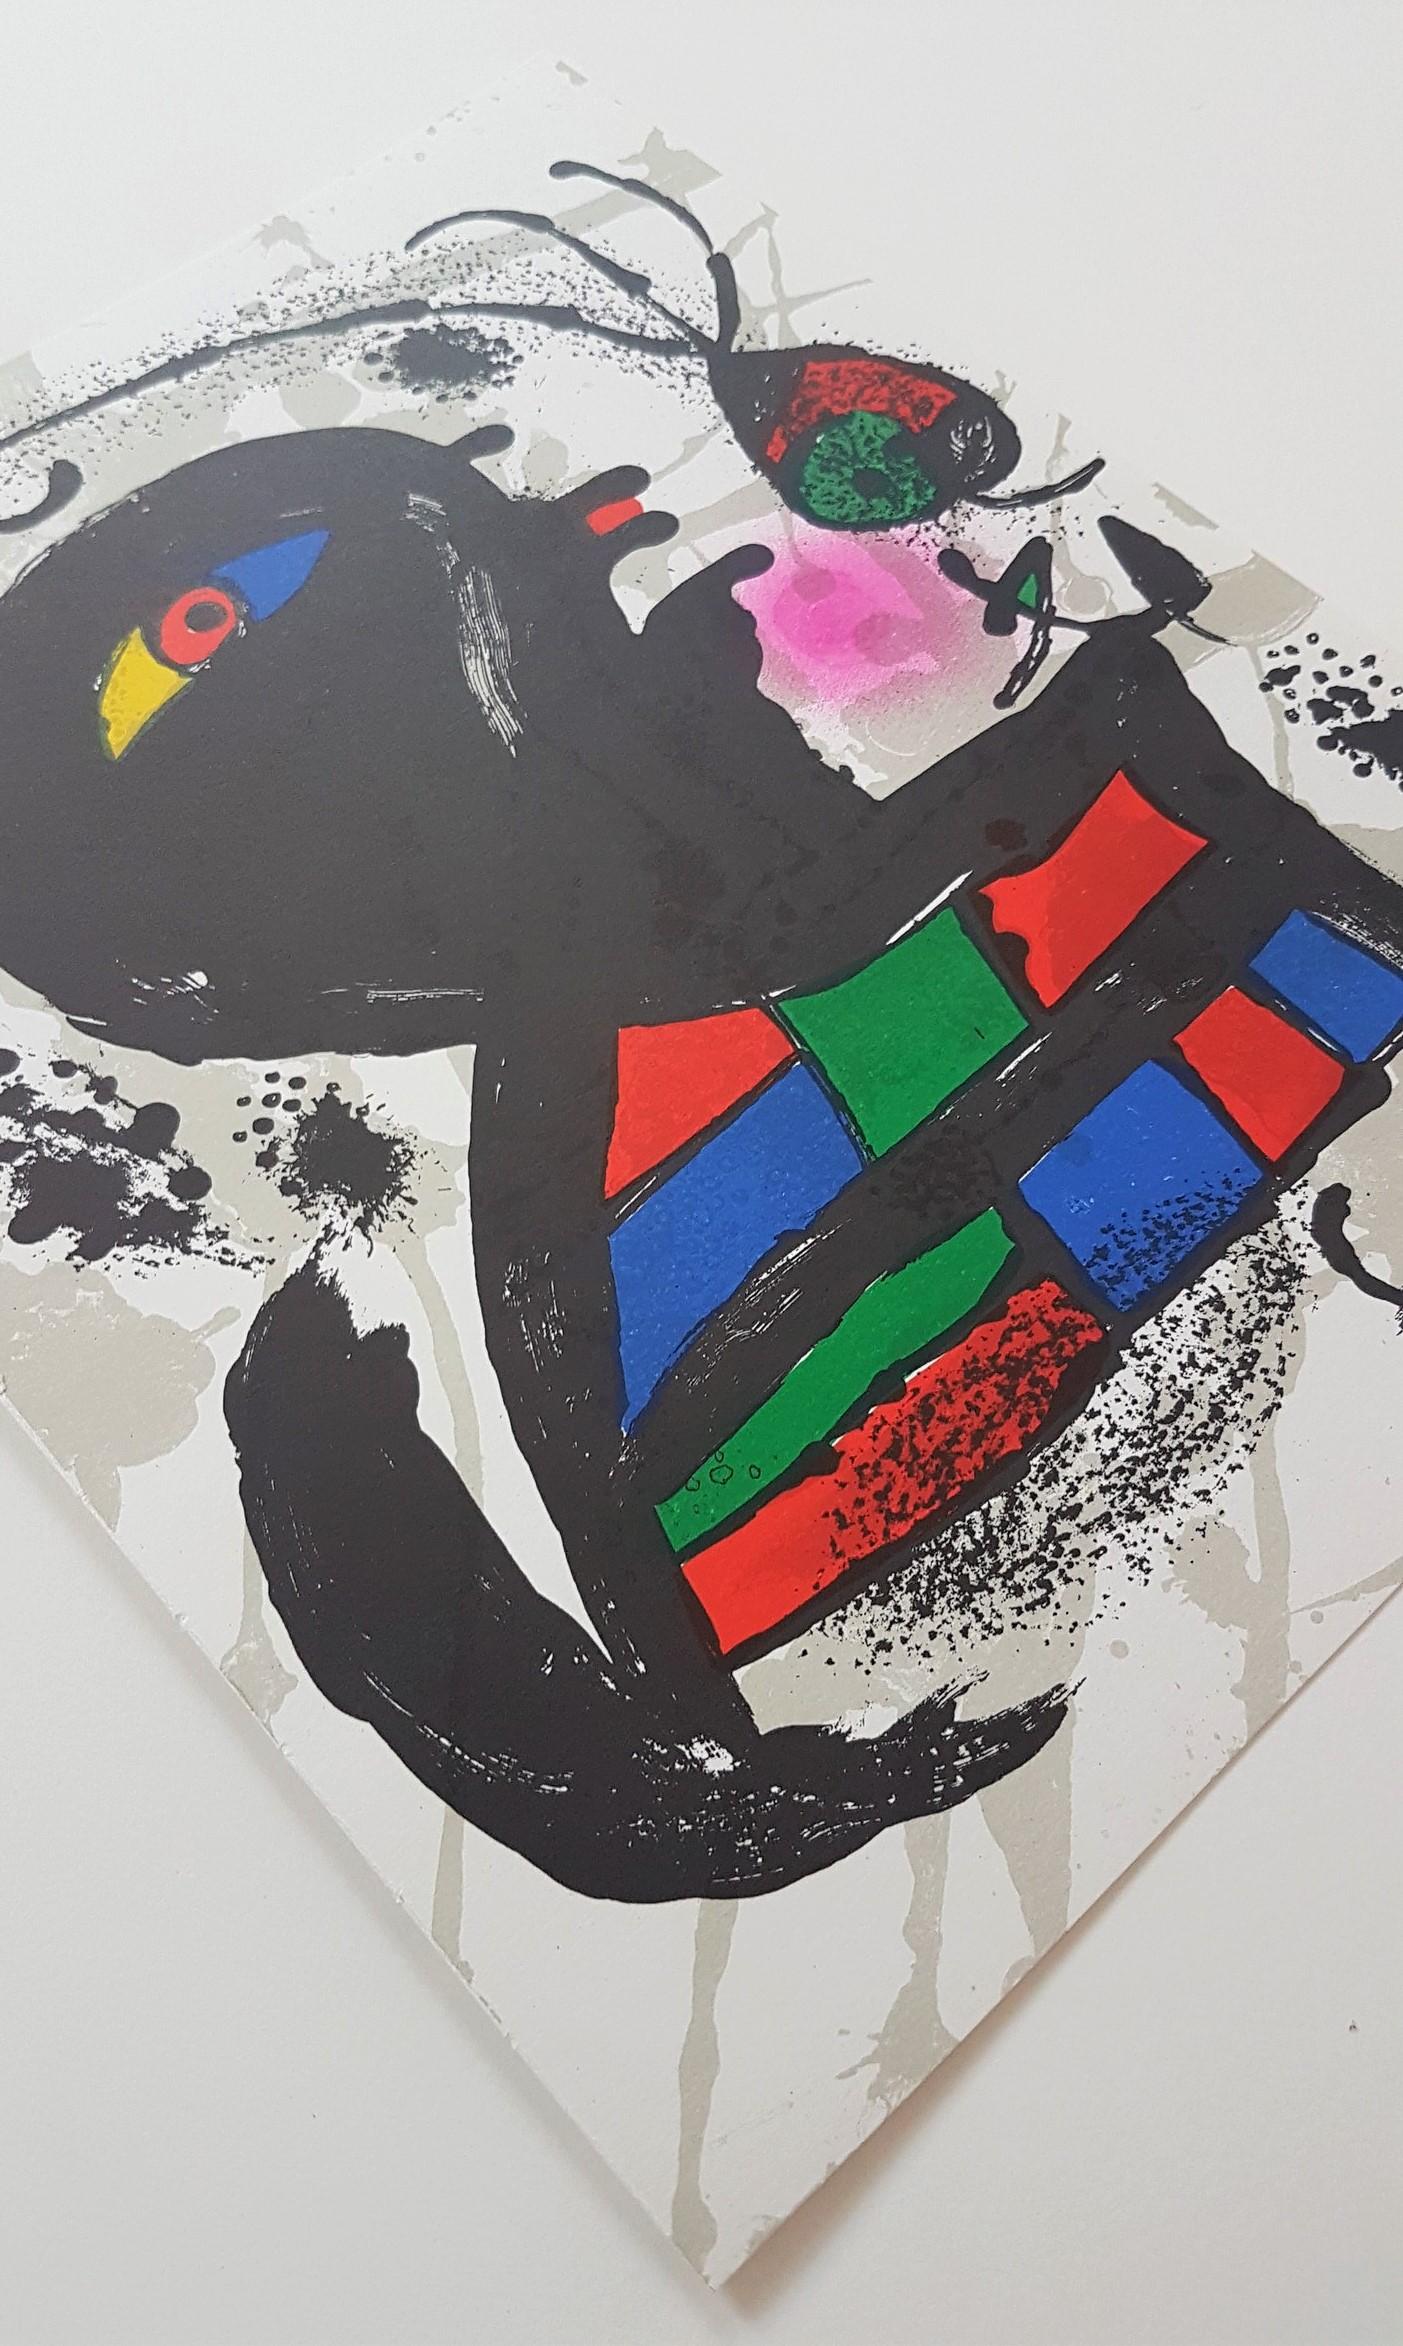 Joan Miró
Lithographie Originale V
Farblithographie
Jahr: 1977
Größe: 12,5 × 9,6 Zoll
Katalog Raisonné: Teixidor, Miro Lithographe III, 1964-1969
Verlag: Maeght Editeur, Paris, Frankreich 
Verso: Typografischer Vermerk: joan Miro - Lithographie